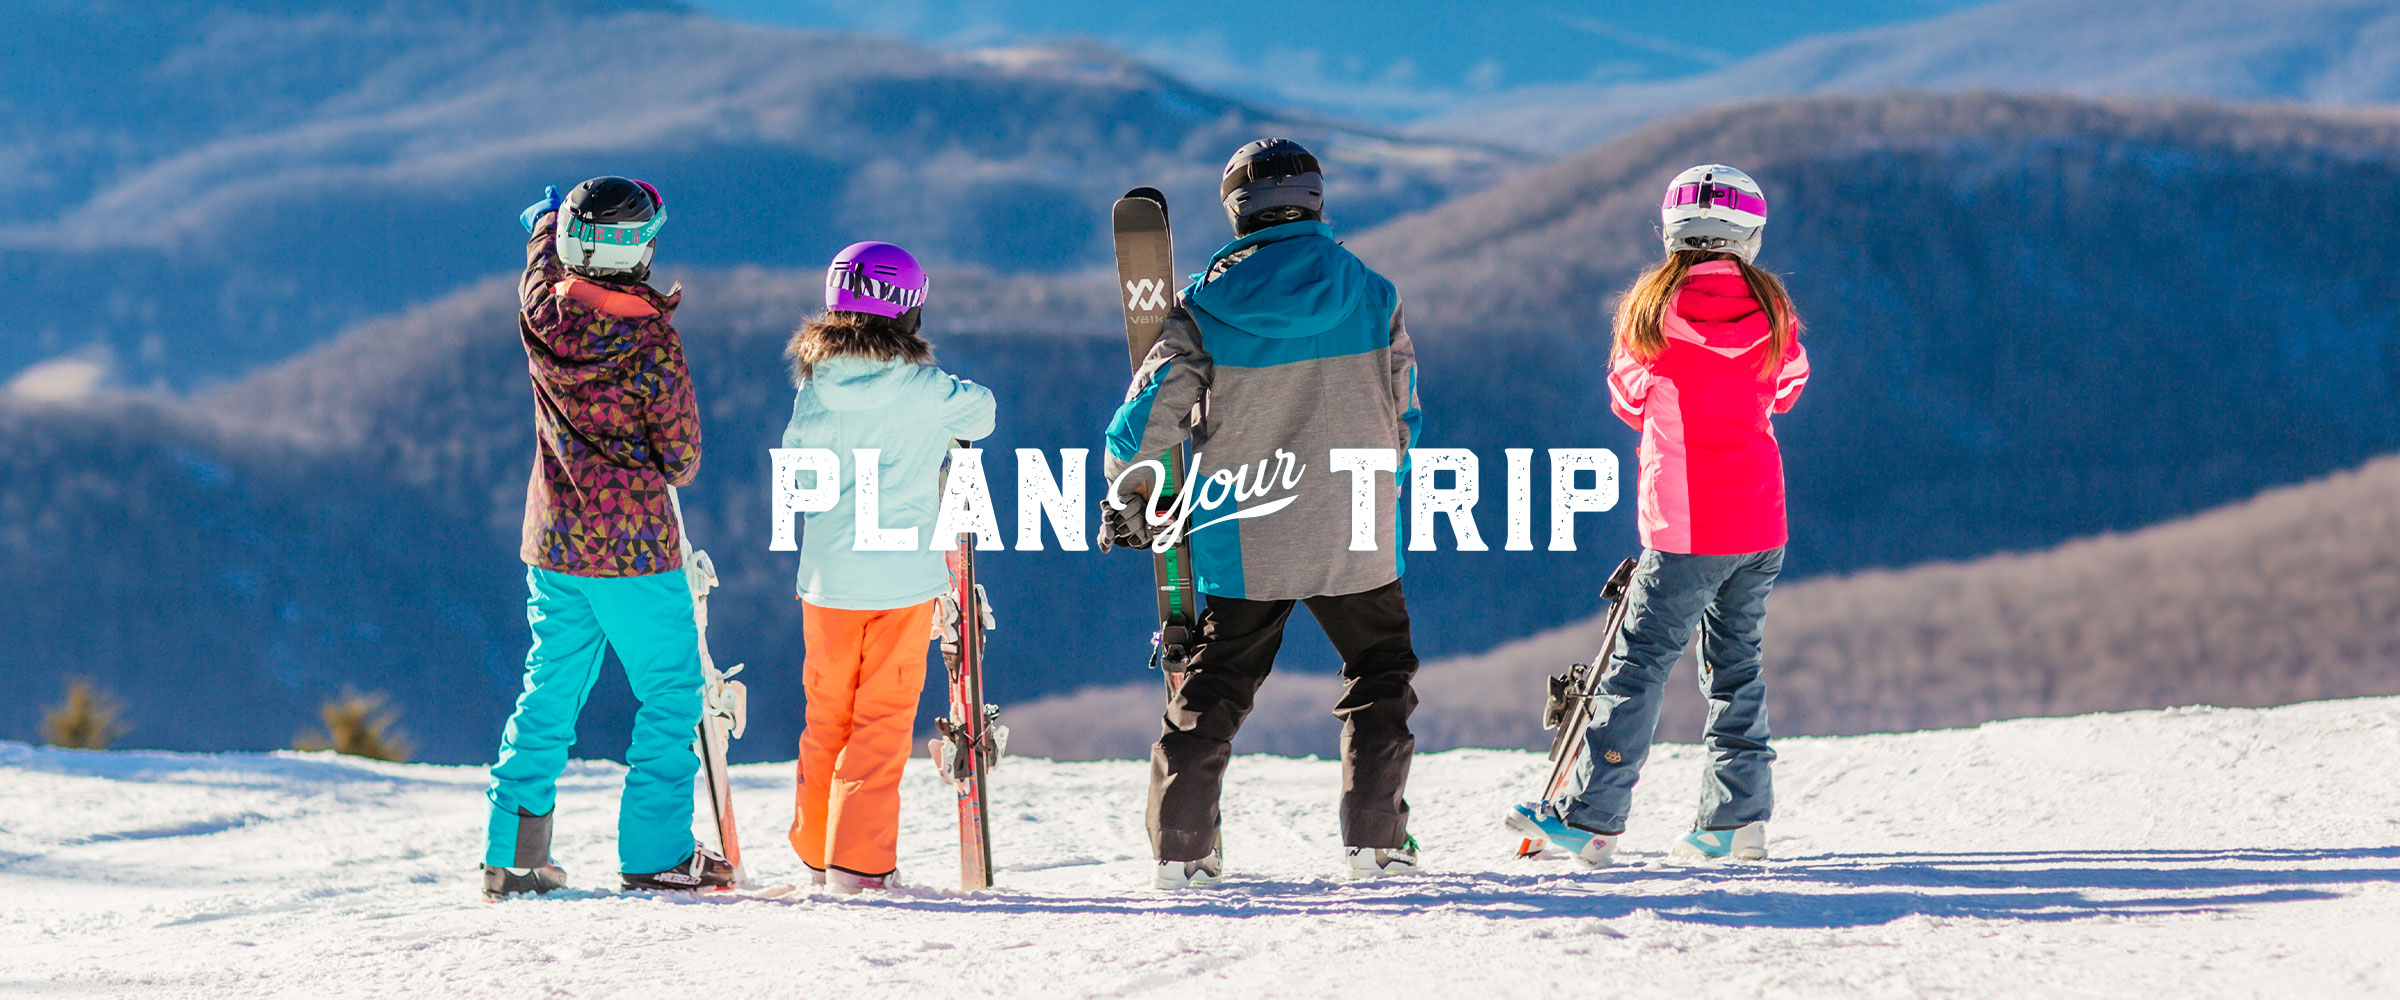 Plan your trip to Snowshoe Mountain